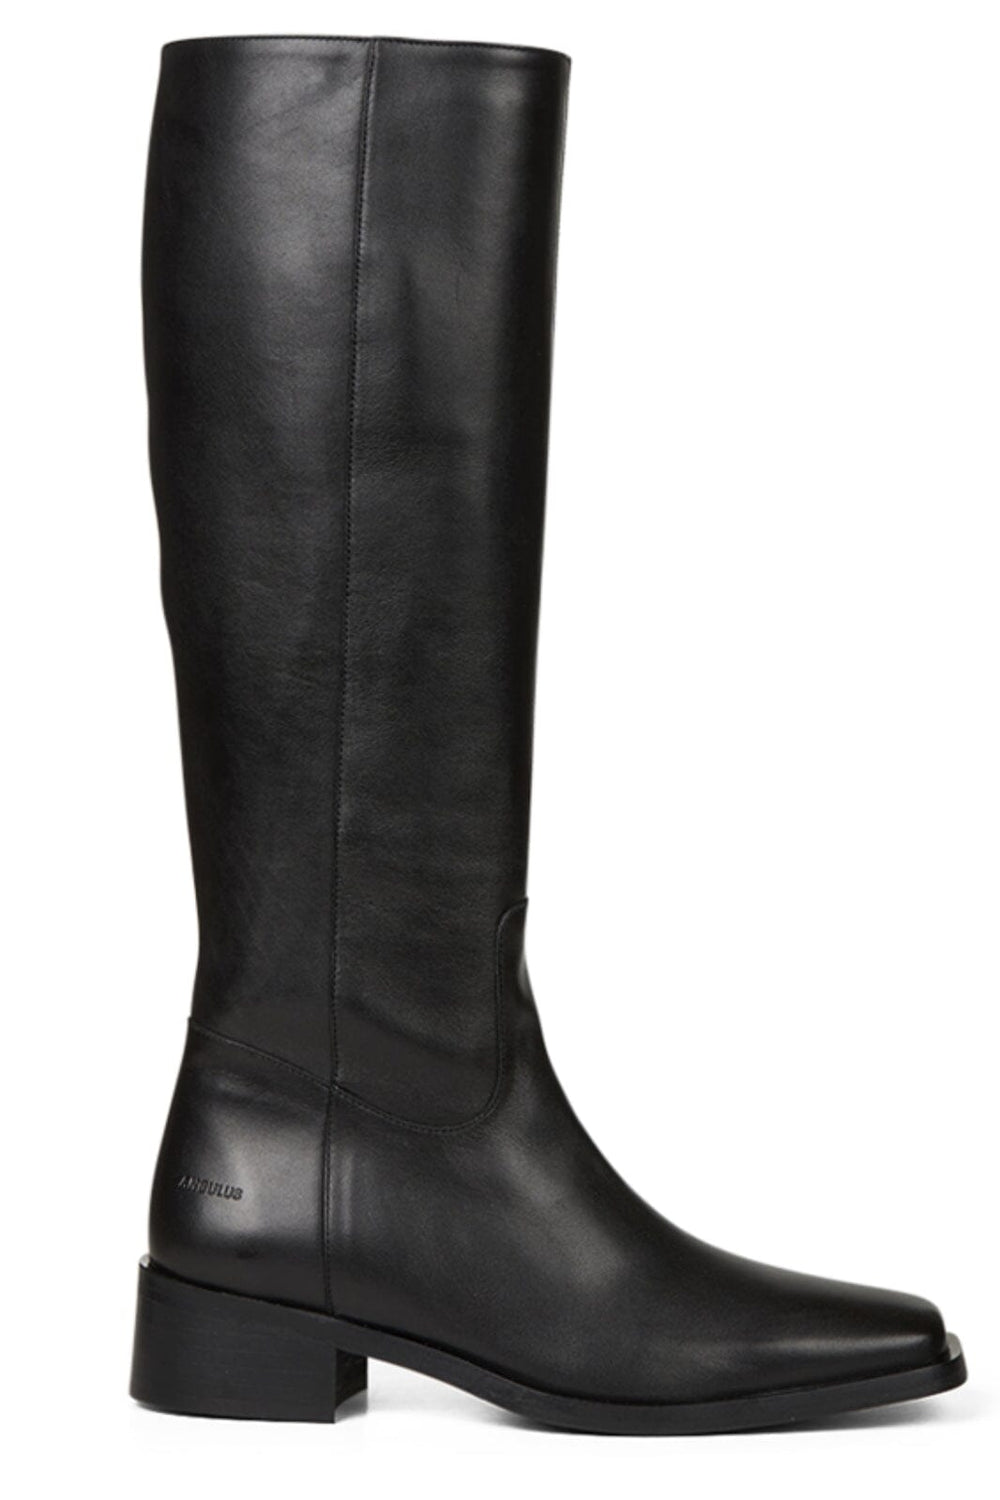 Angulus - High-leg boot with zipper - 1604 Black Støvler 